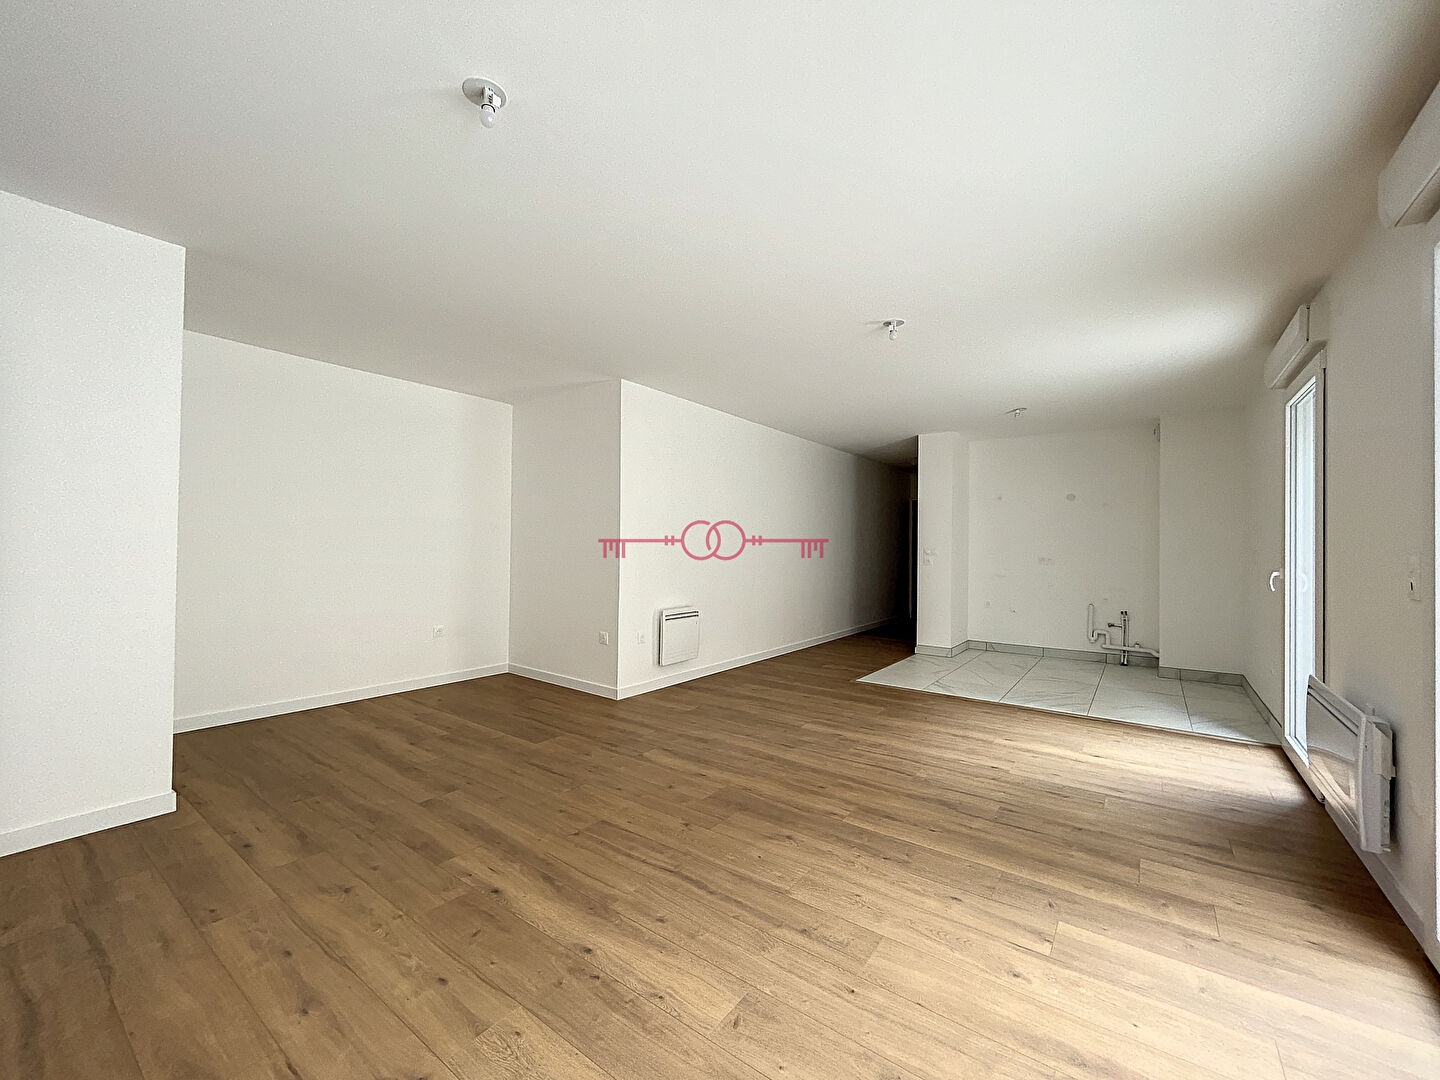 NEUF - Appartement 4 pièce(s) 90,87 m2 - 1